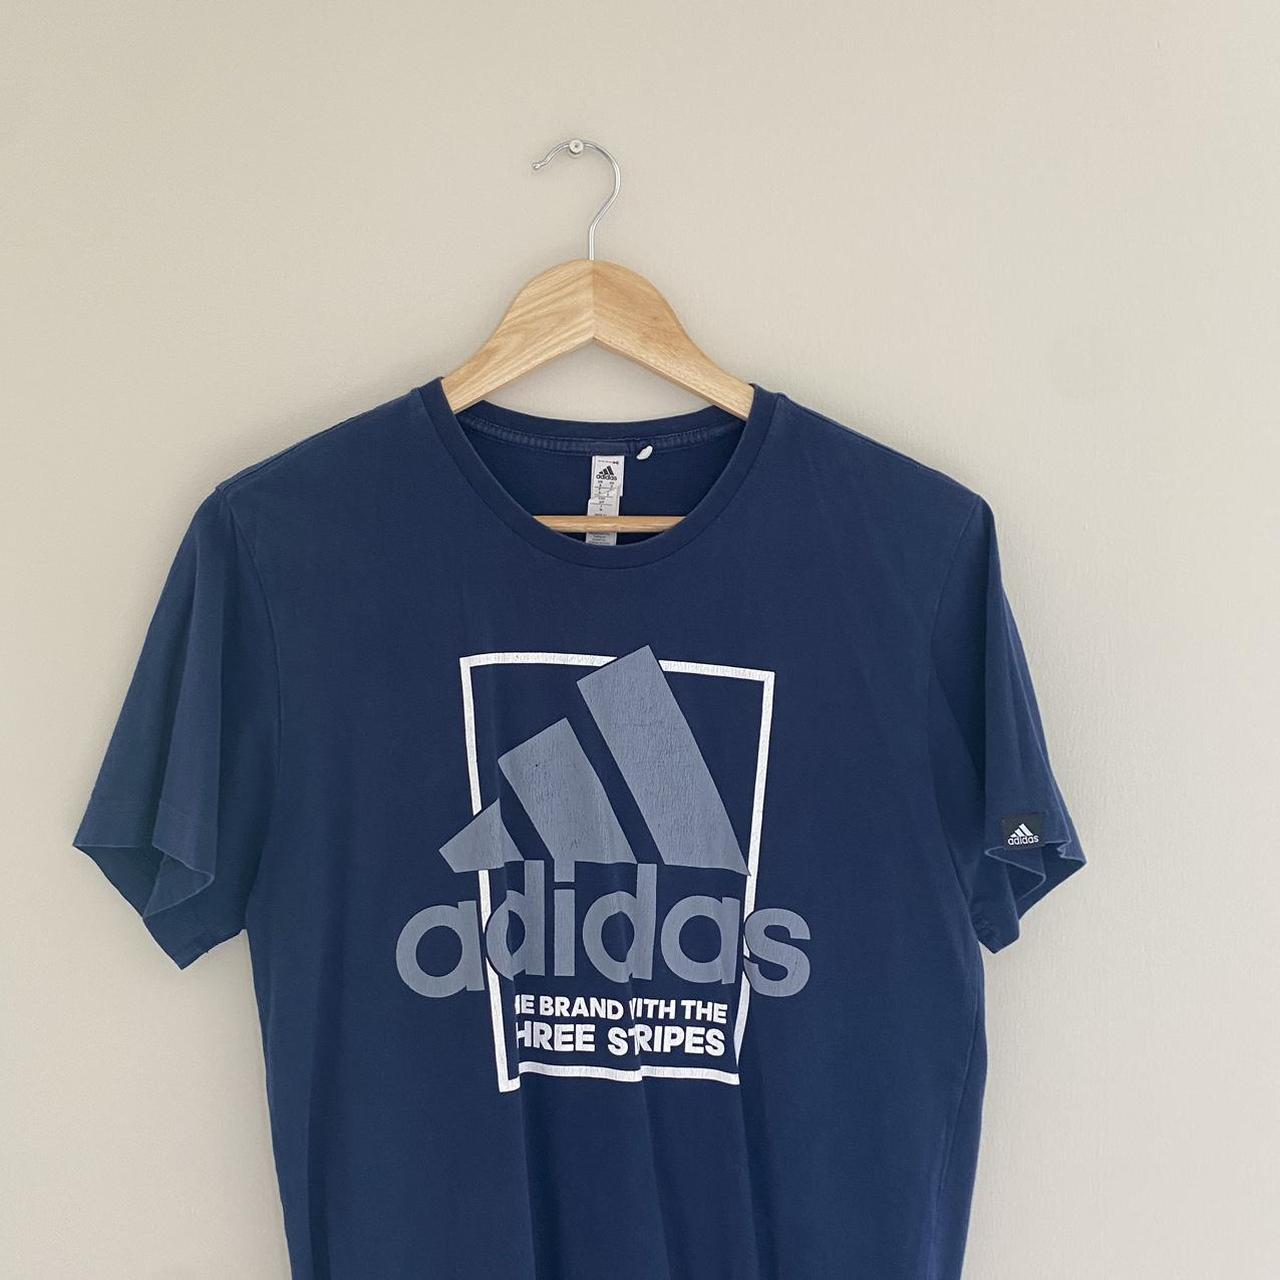 Adidas T-shirt - Printed logo - Navy, white and grey... - Depop